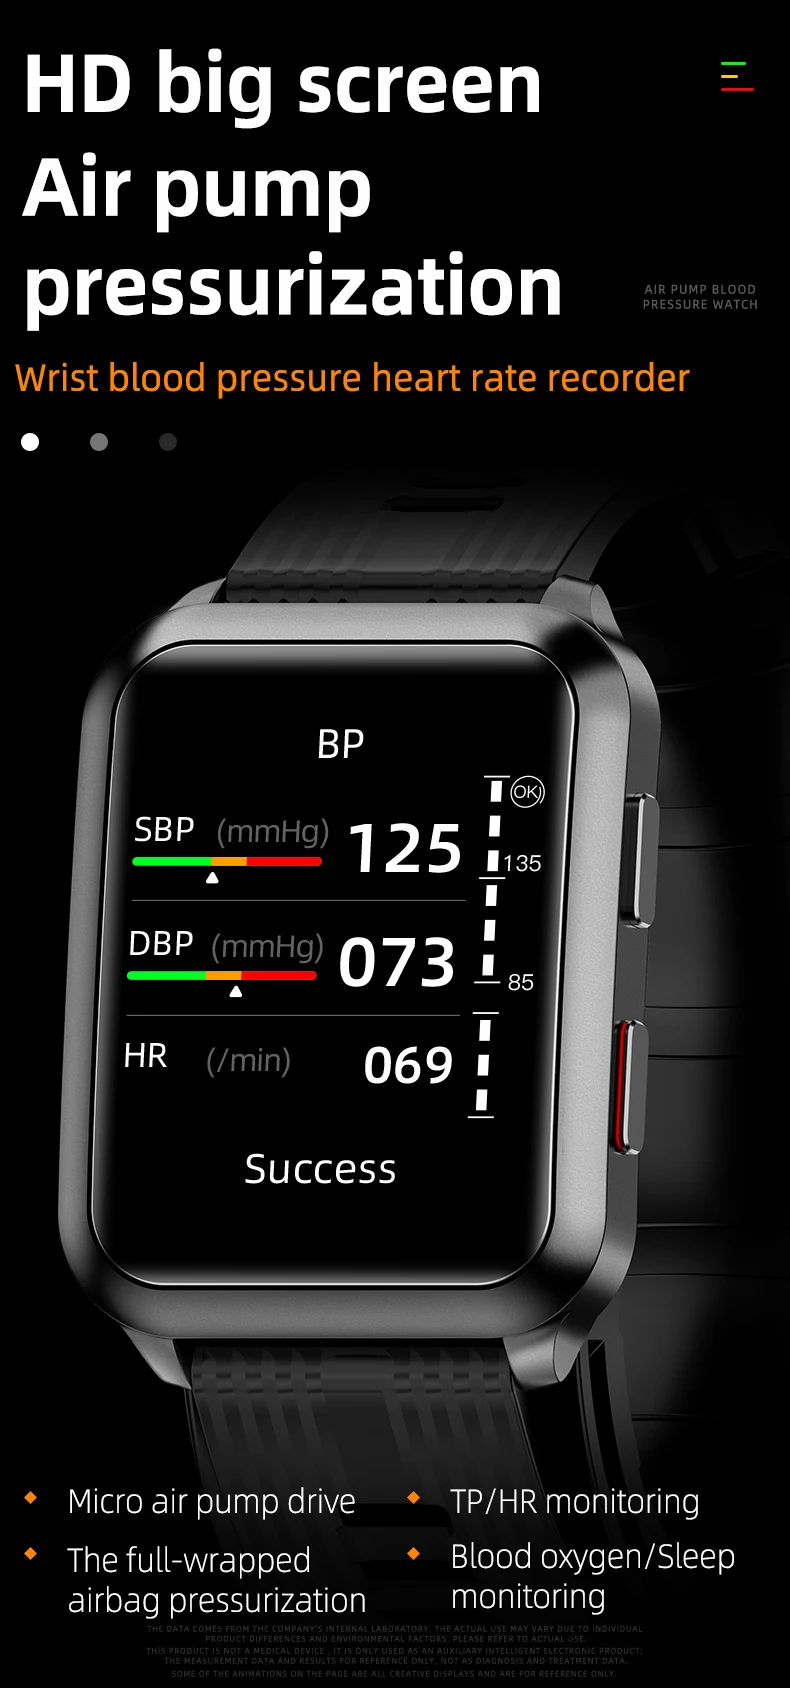 2022 New Arrival P60 Medical Grade Portable Accurate Air Pump Air Bag Blood Pressure Heart Rate Monitor Health Smart Watch (1).jpg